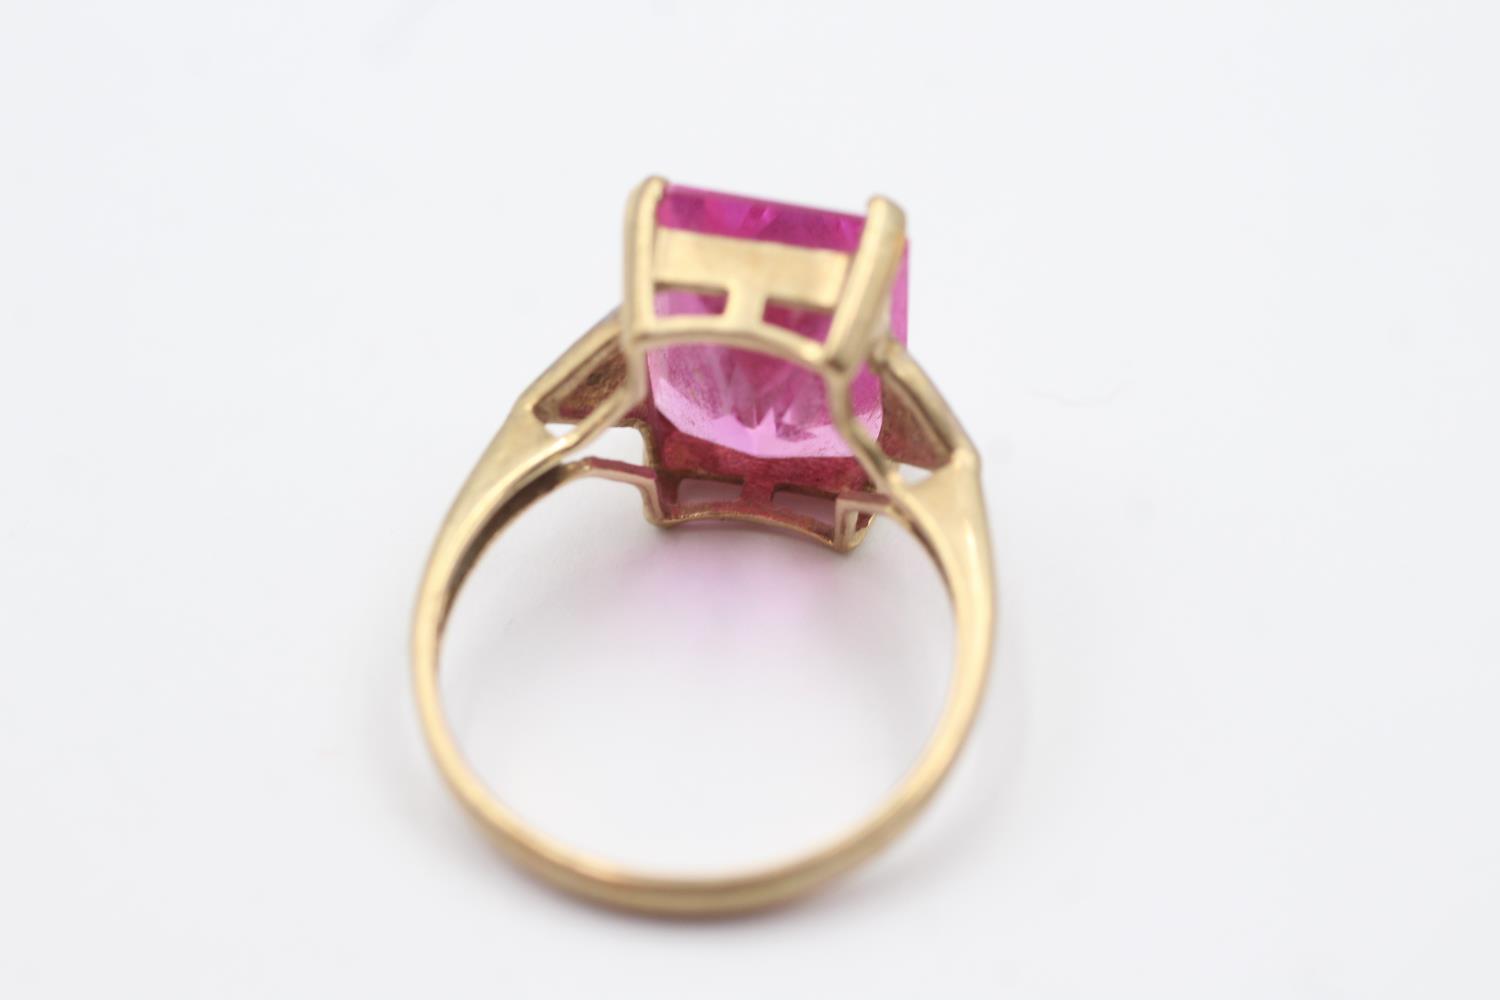 9ct gold vintage pink gemstone & diamond cocktail ring (4g) Size Q - Image 3 of 4